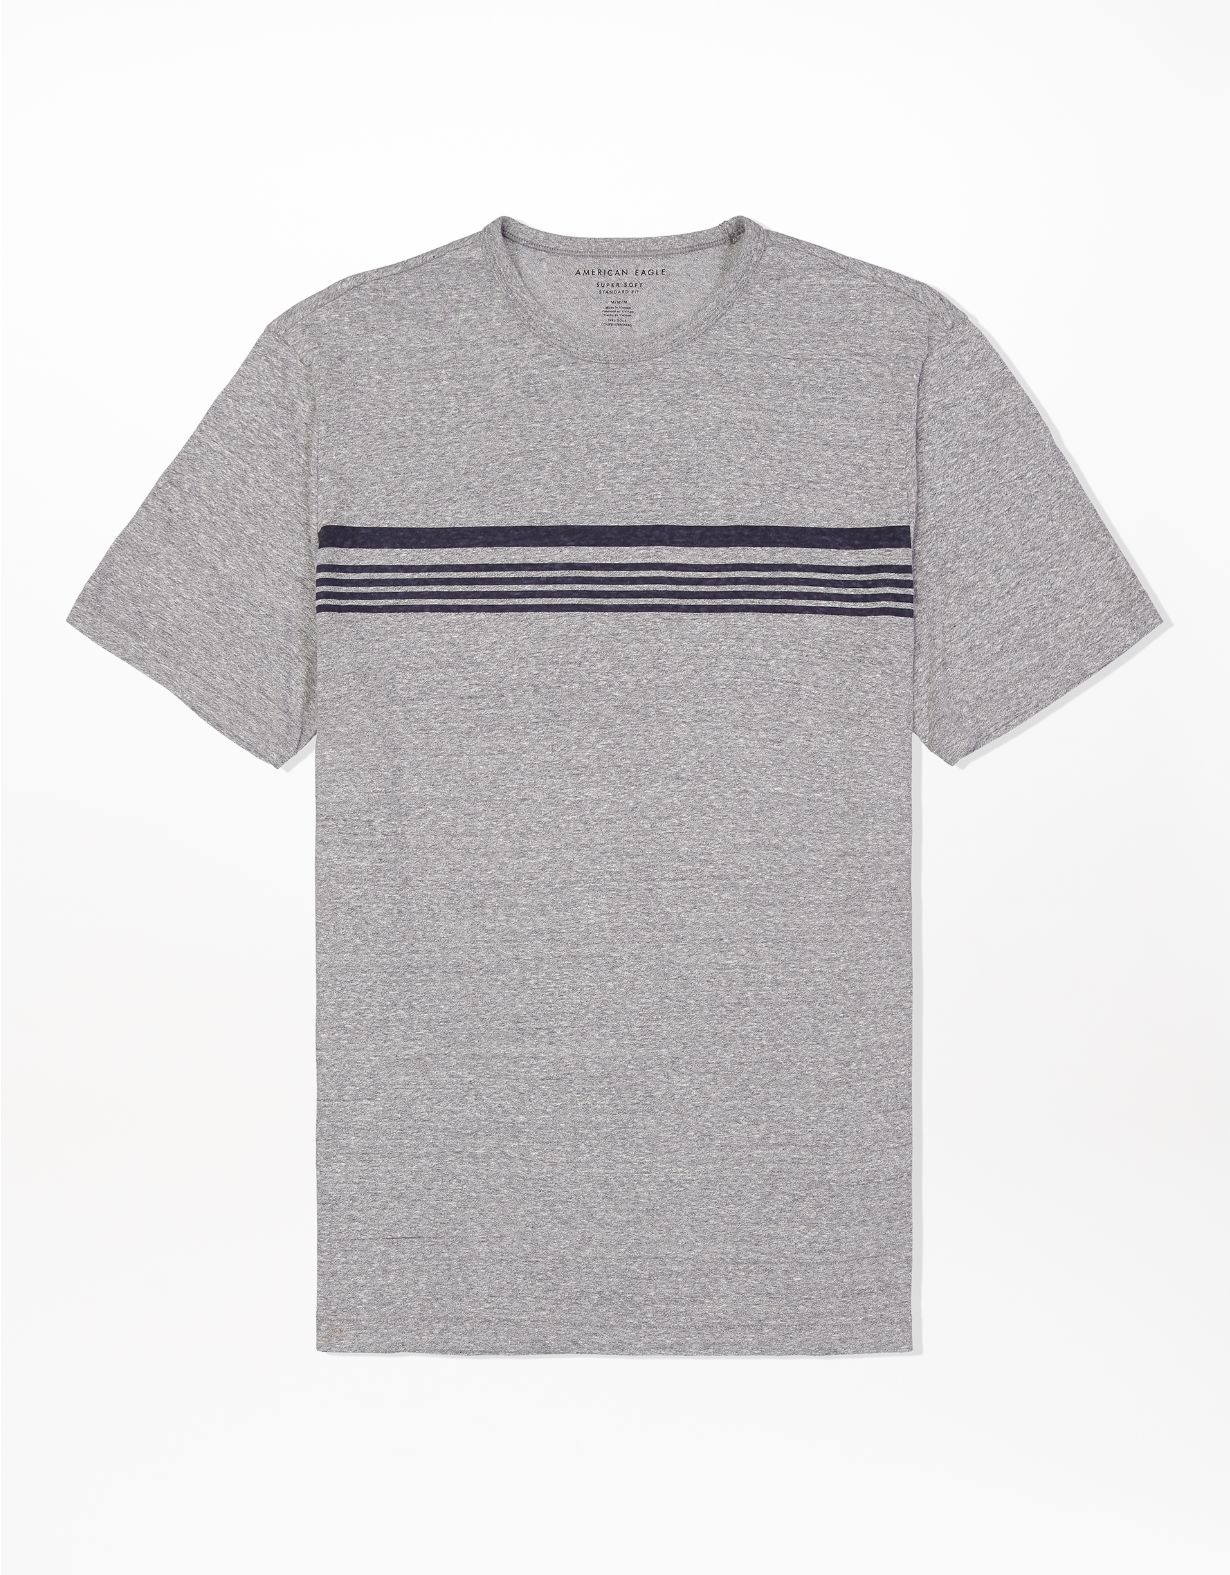 AE Striped T-Shirt